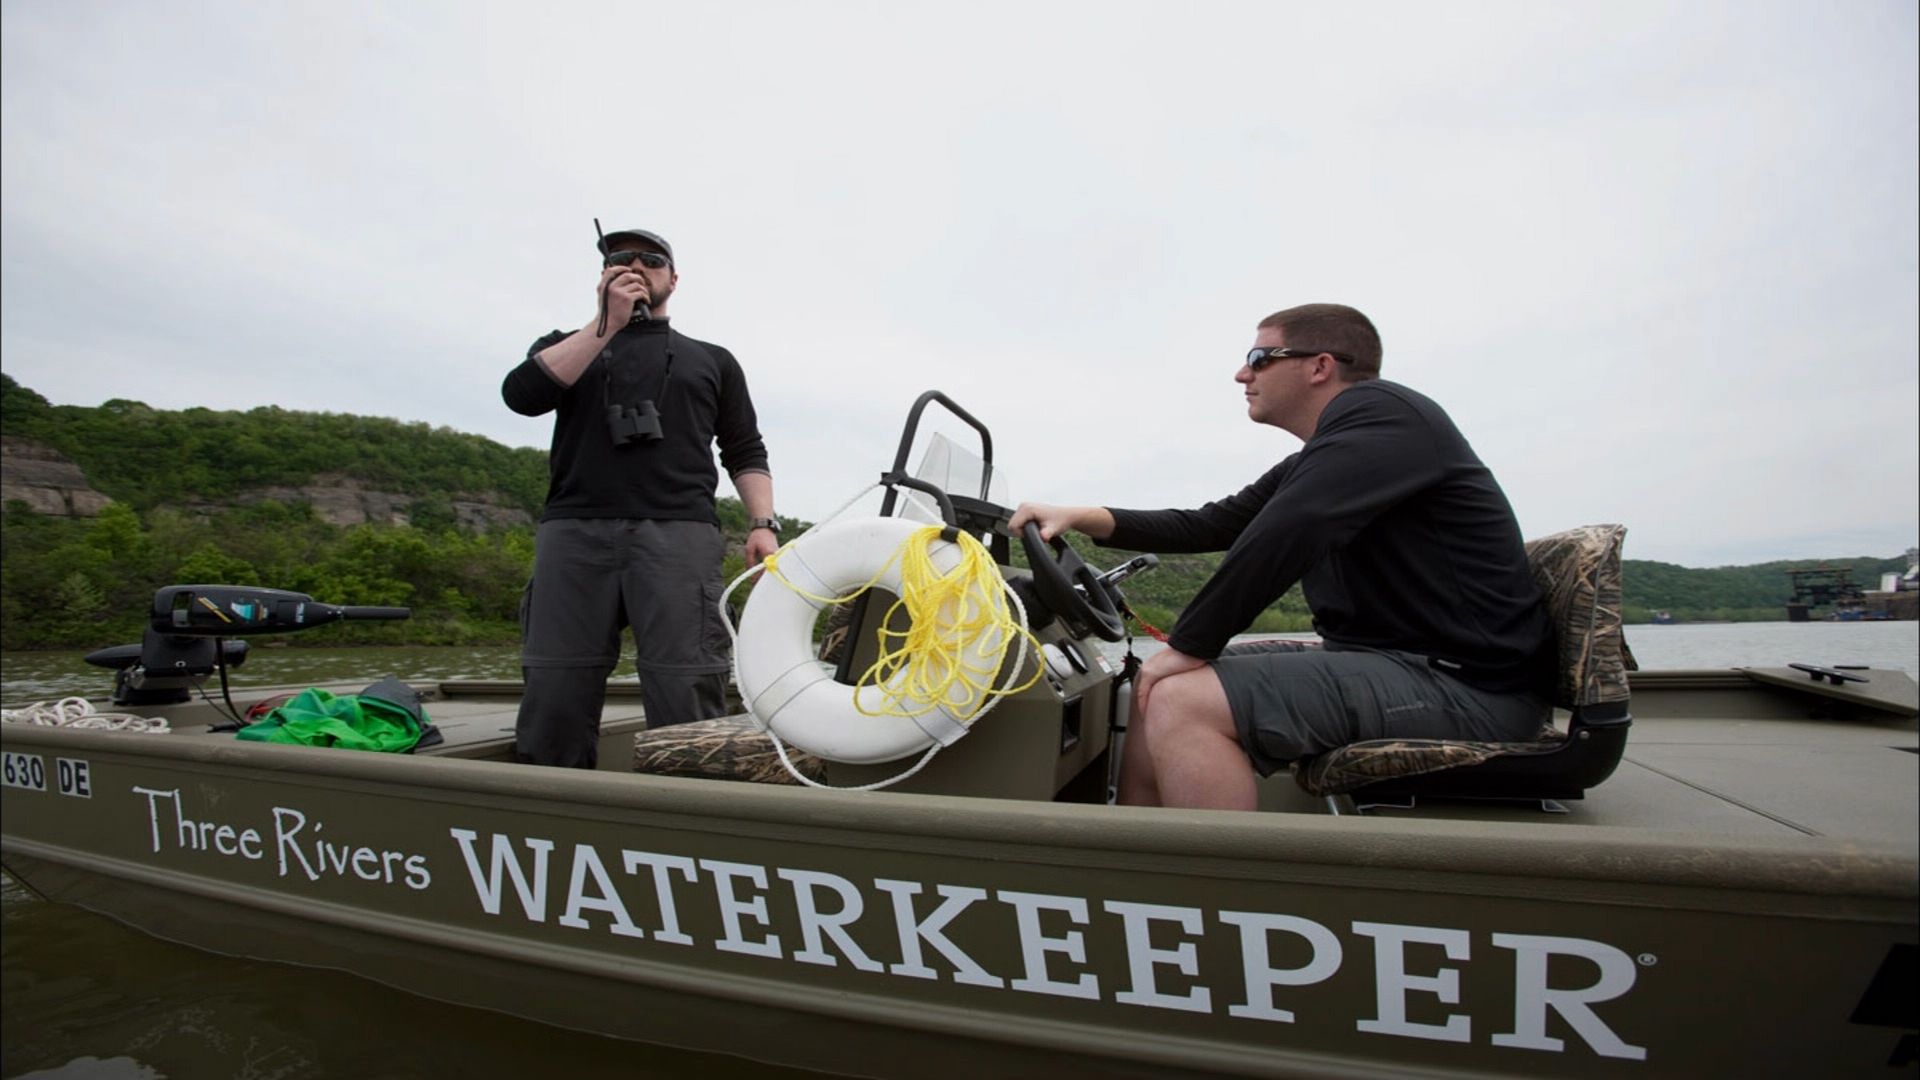 Two members of Three Rivers Waterkeeper on their boat